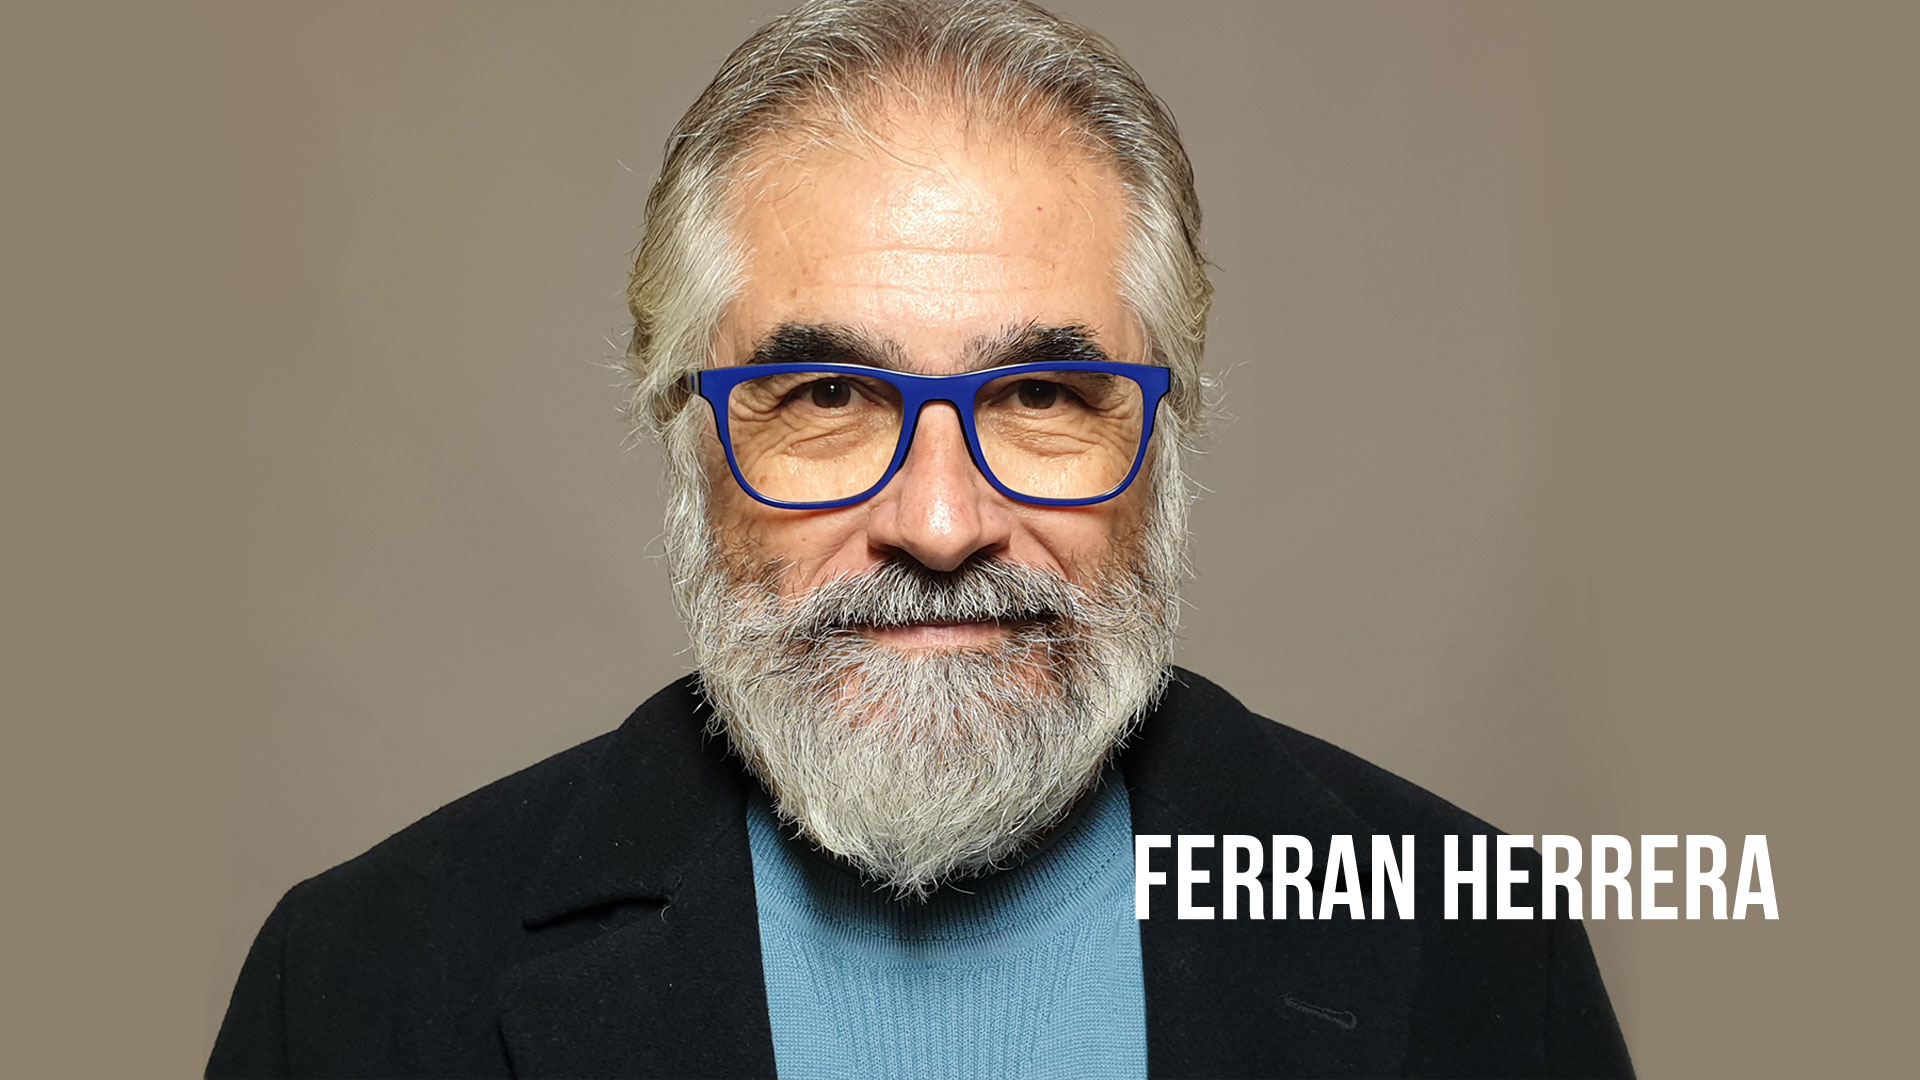 Ferran Herrera | Videobook Actor